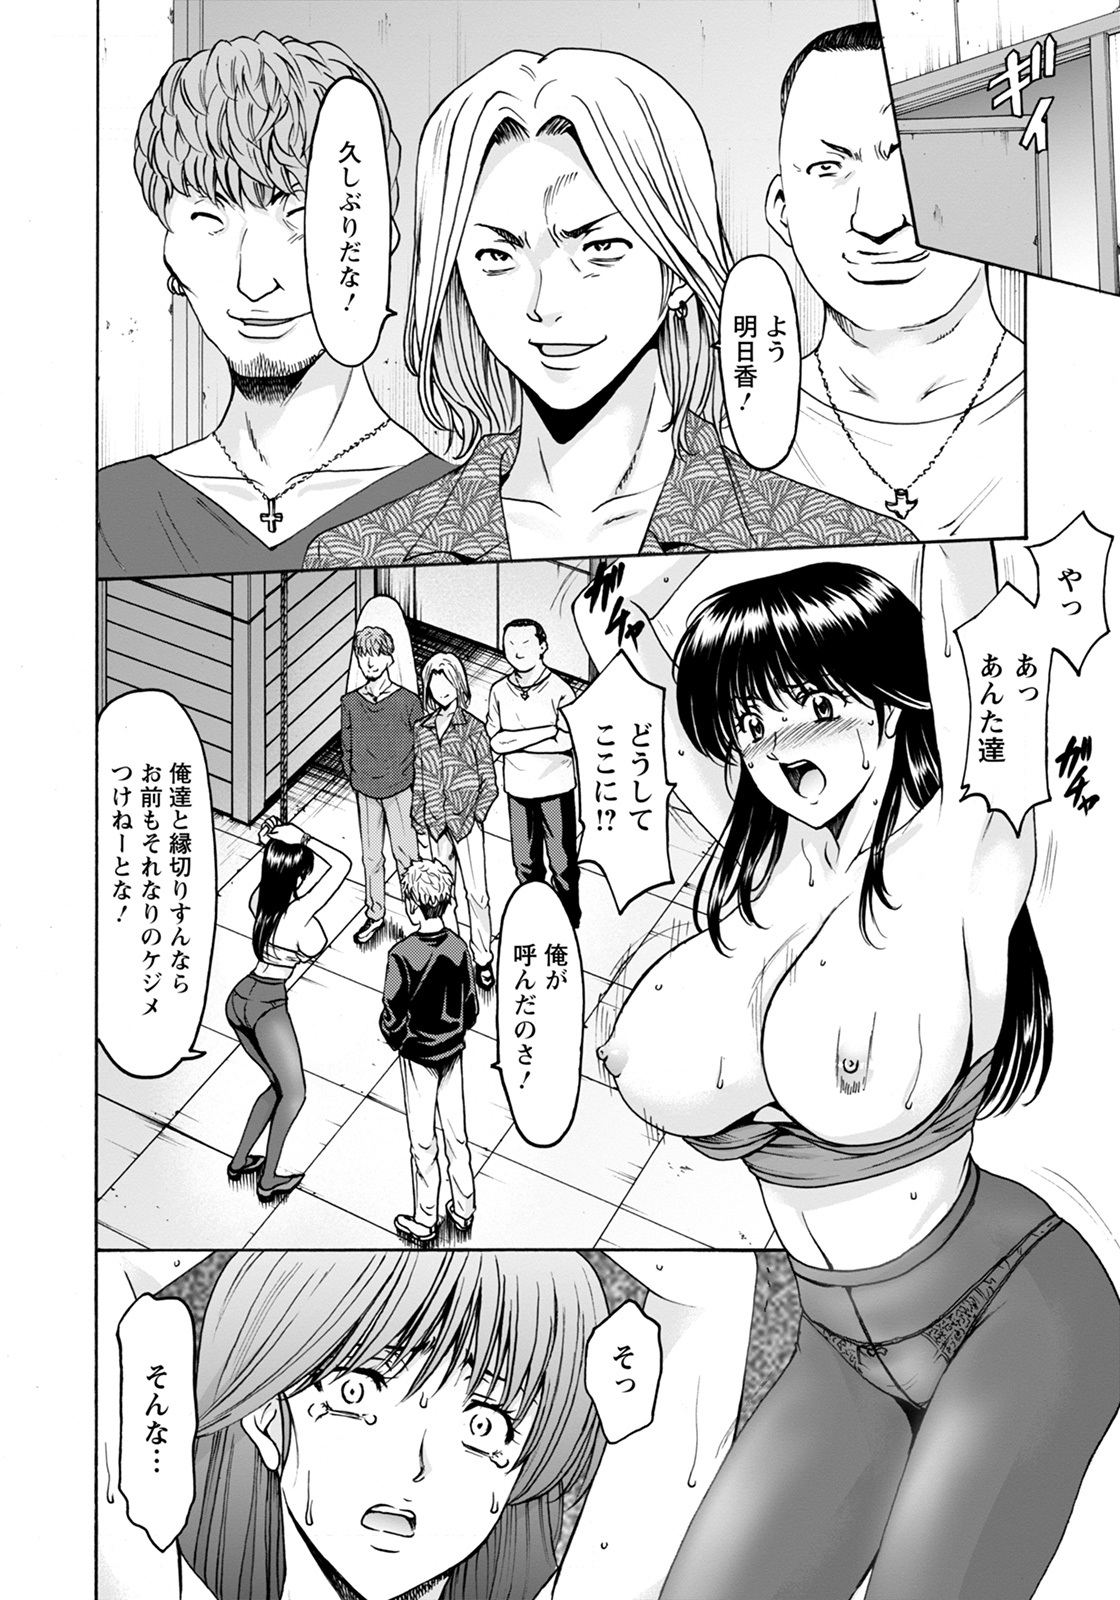 Asami ryuichi threesome